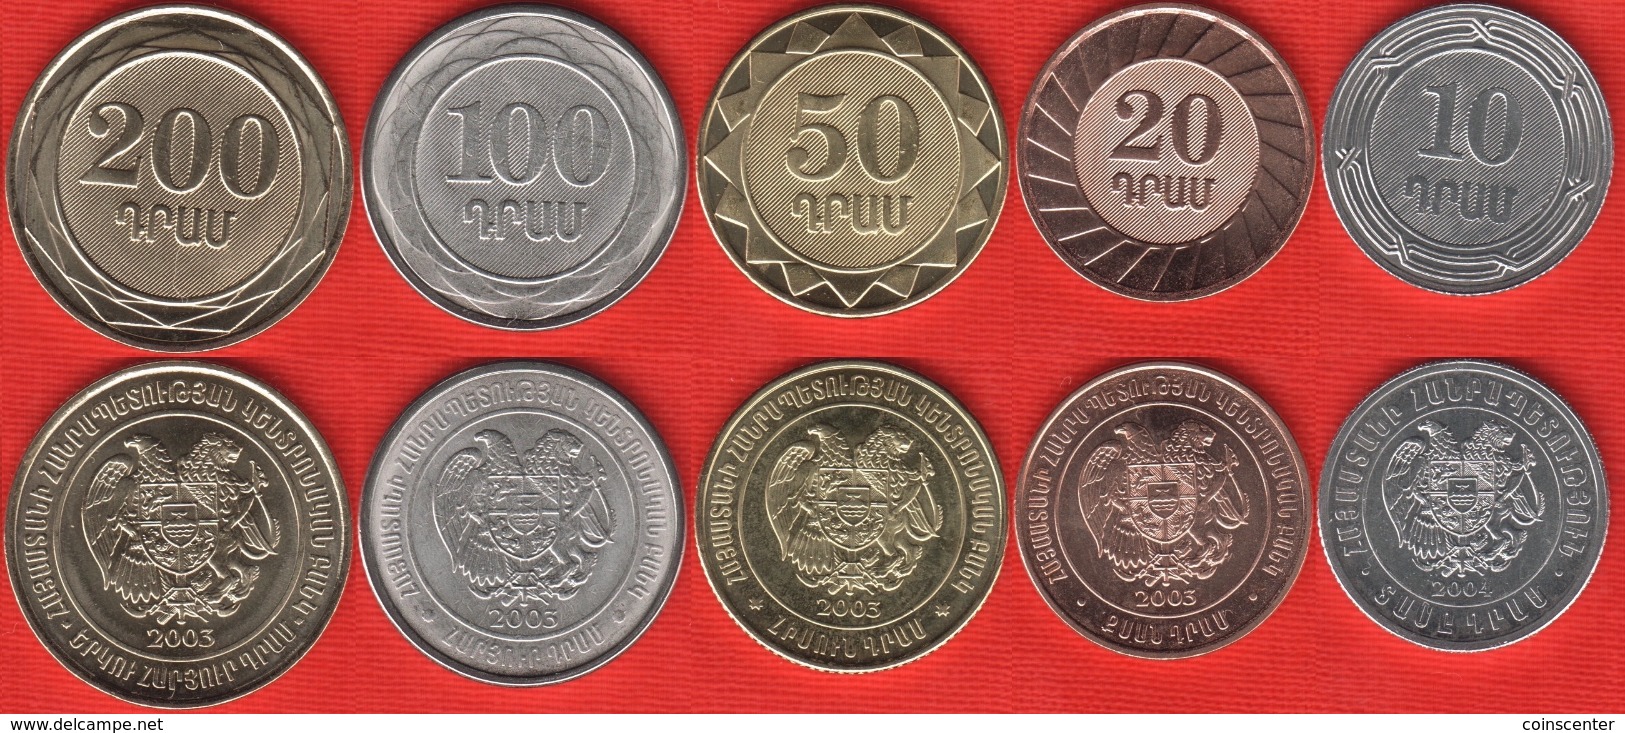 Armenia Set Of 5 Coins: 10 - 200 Dram 2003-2004 UNC - Armenia